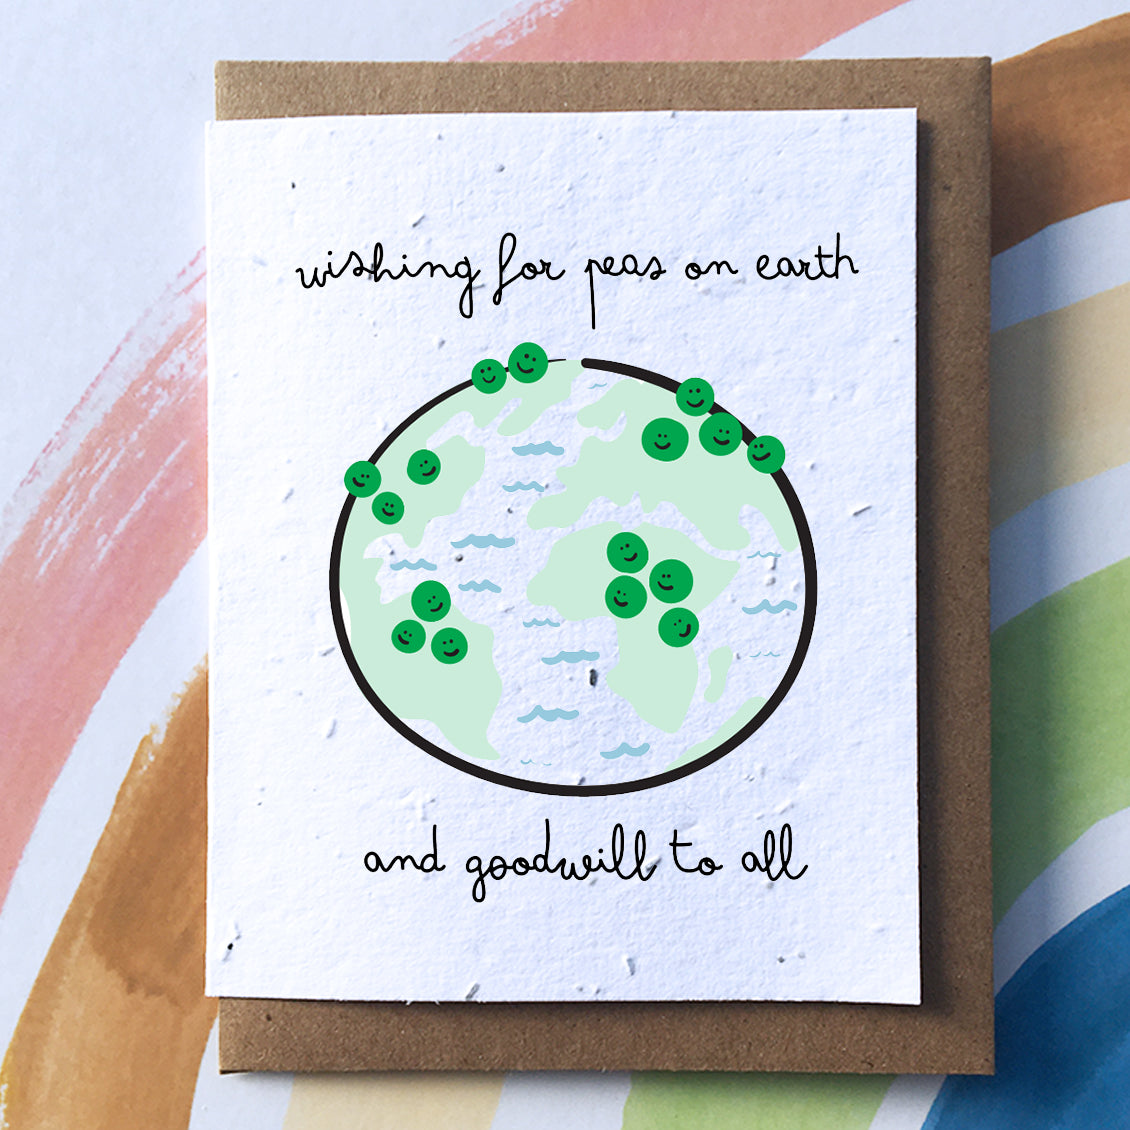 <img src="peace.jpg" alt="peace on earth Christmas sustainable zero waste greeting card">